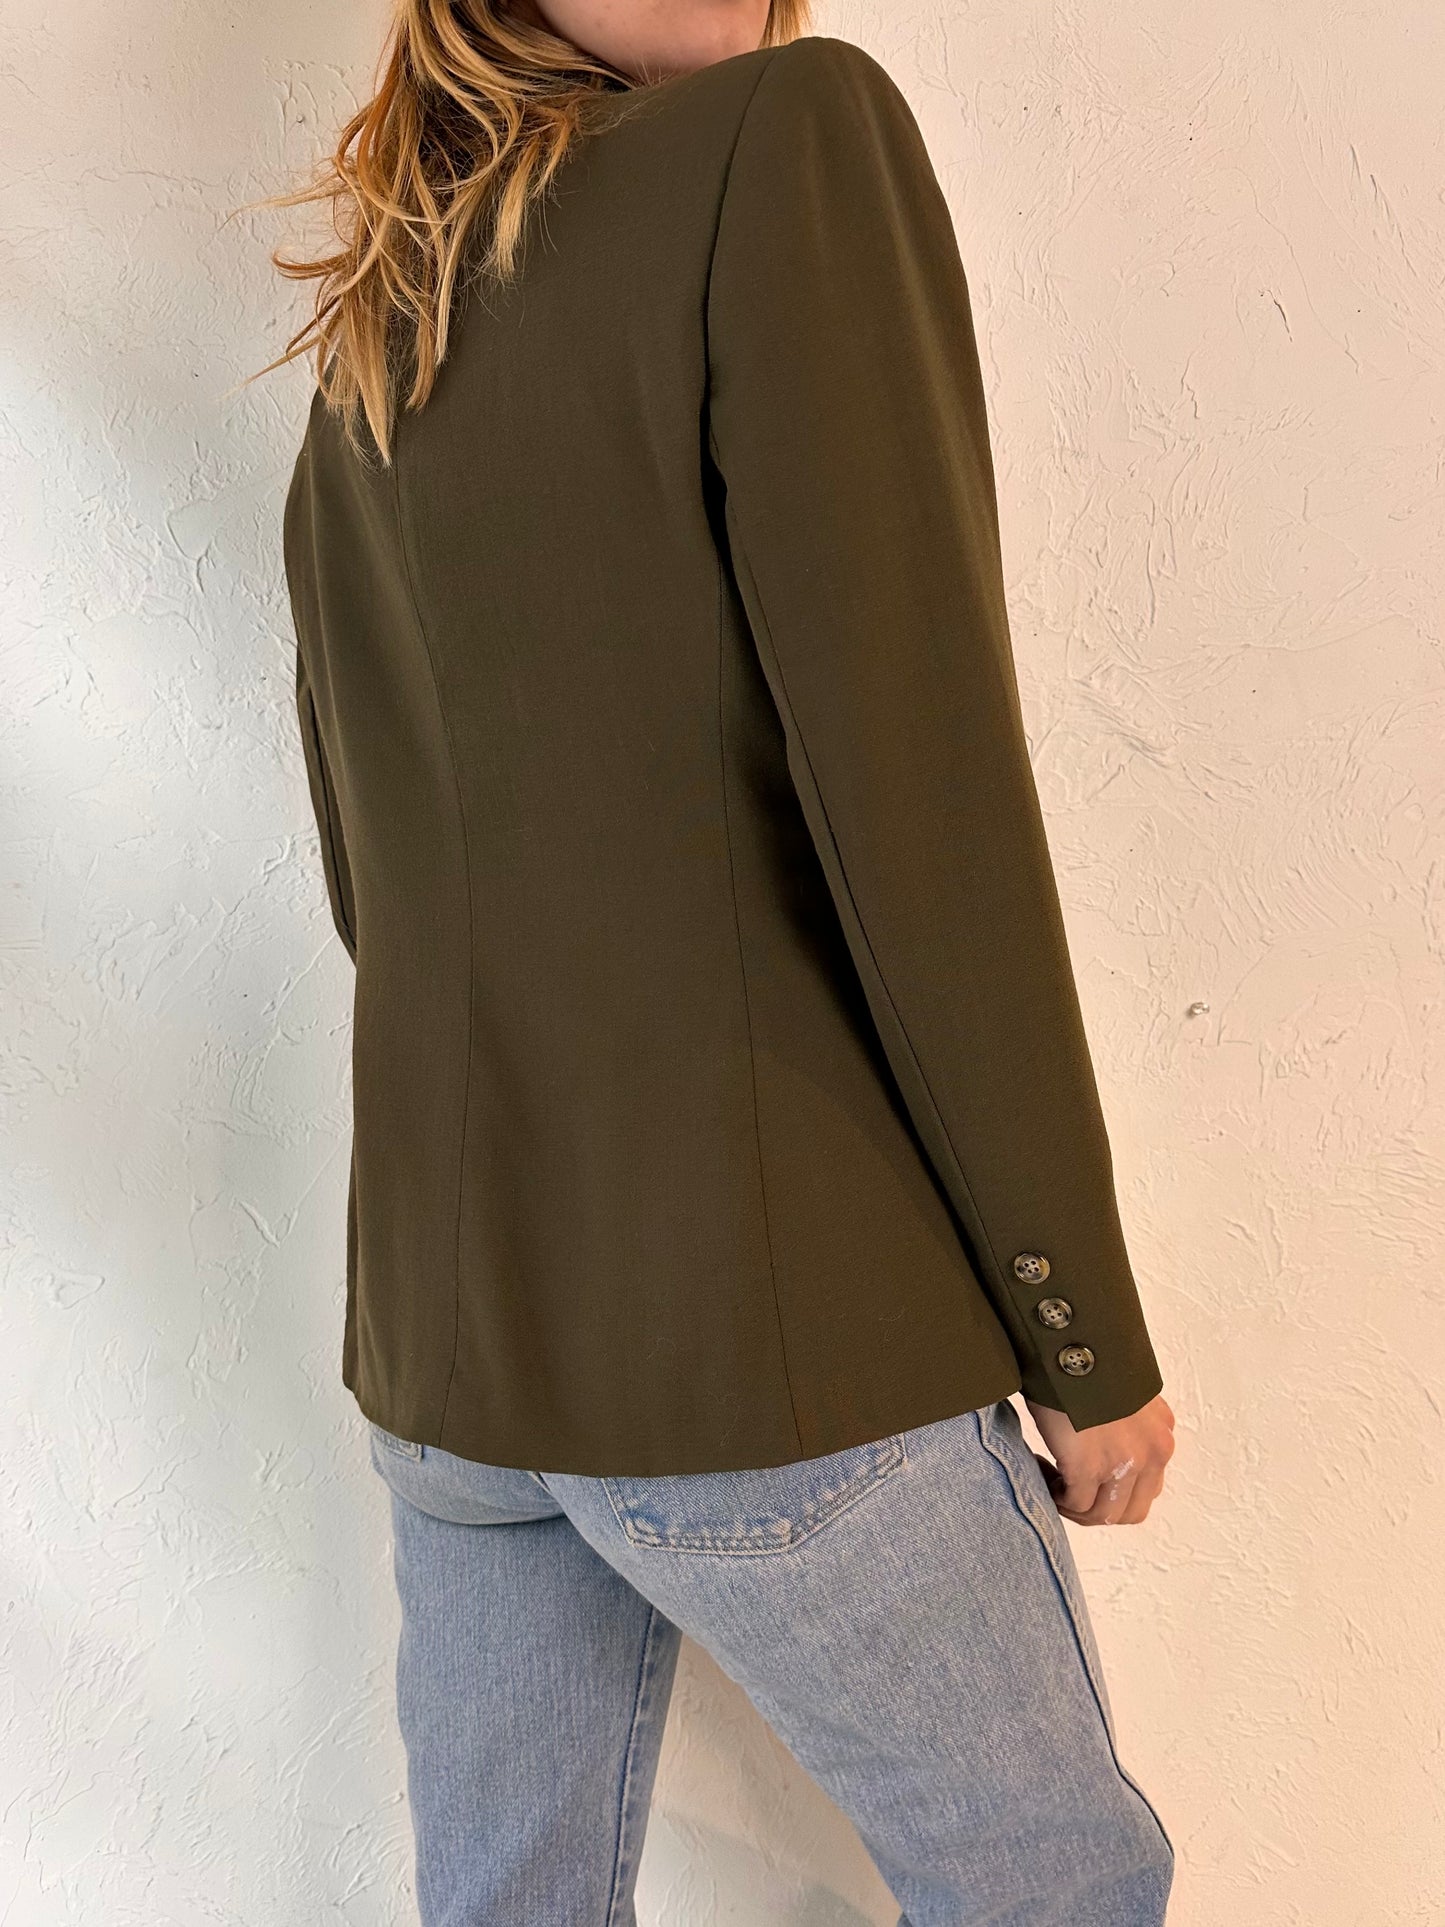 90s 'Jones New York' Green Wool Blazer Jacket / Medium